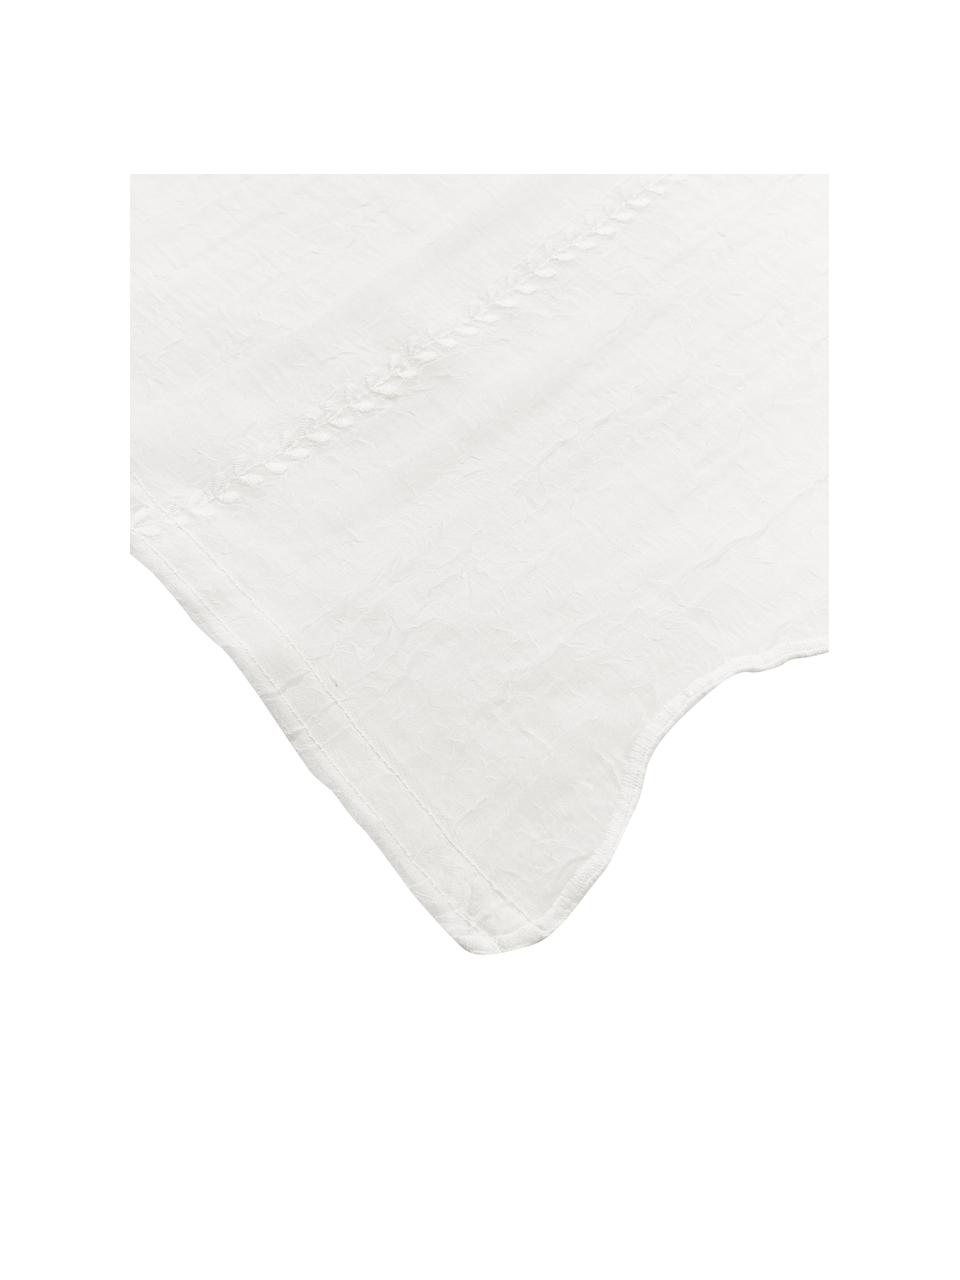 Mantel bordado Bilia, 100% poliéster, Blanco crema, De 6 a 10 comensales (An 160 x L 320 cm)